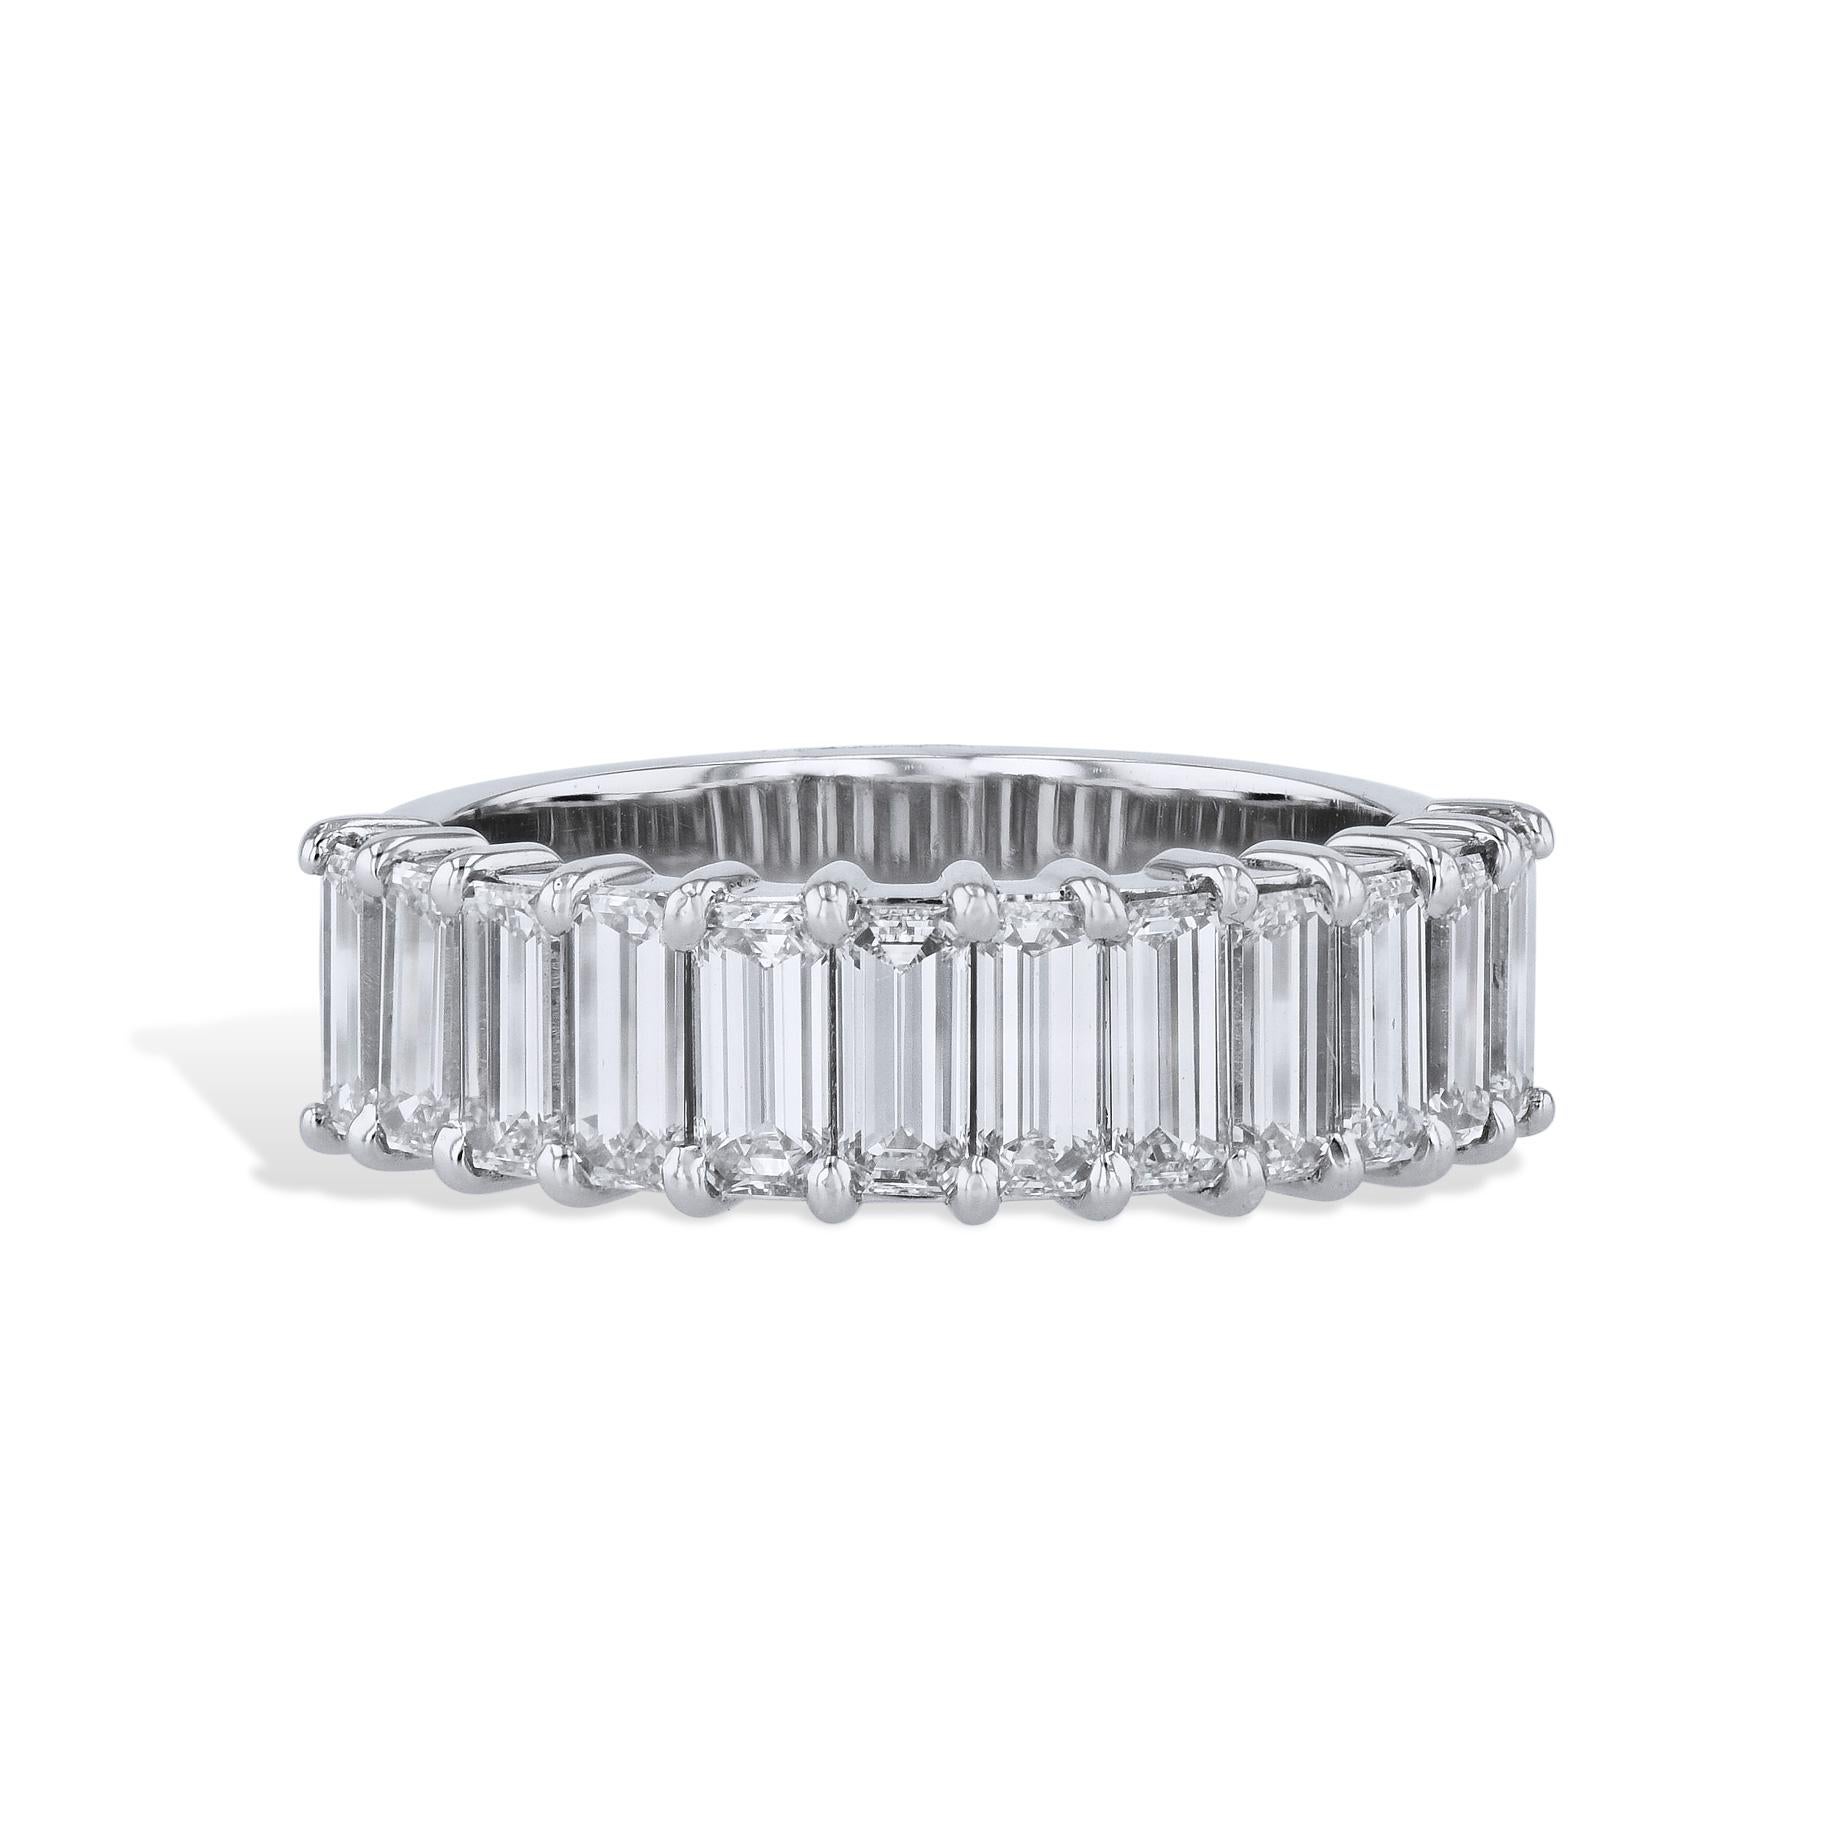 Handmade 2.04 Carat Emerald Cut Diamond Platinum Band Ring In New Condition For Sale In Miami, FL